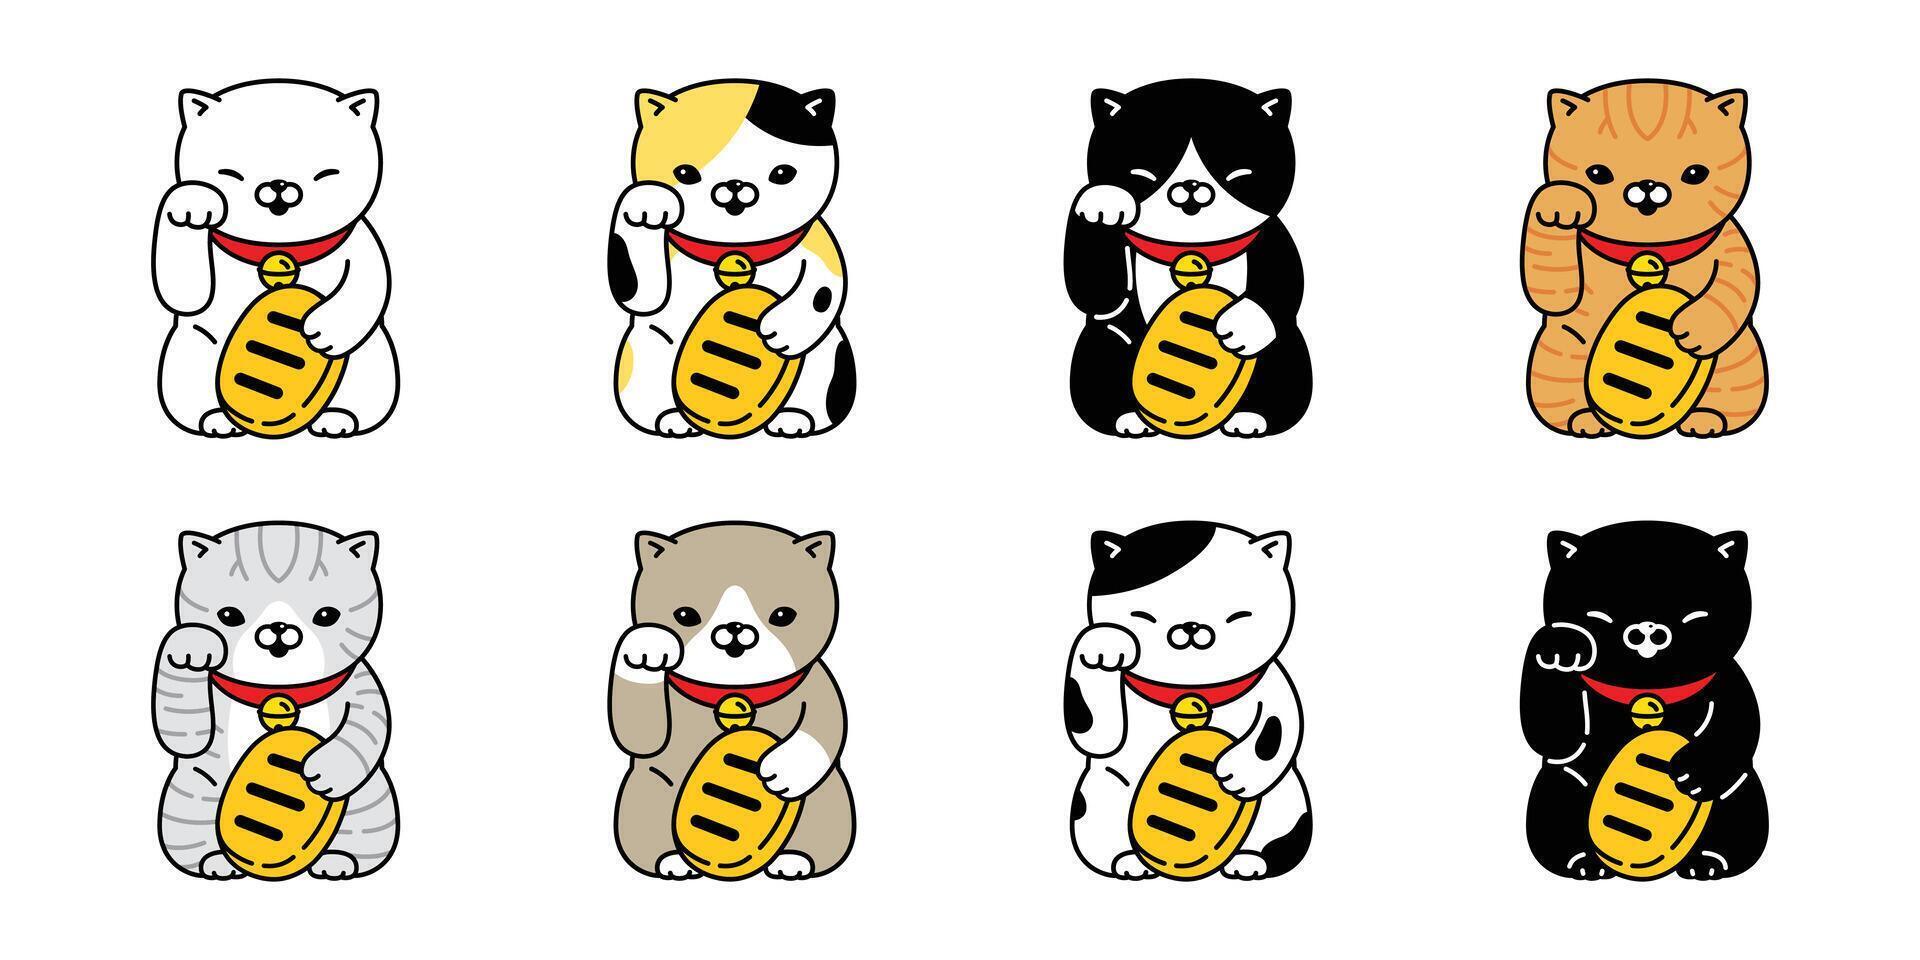 cat vector lucky cat japan Maneki Neko icon kitten calico logo symbol breed character cartoon illustration doodle design